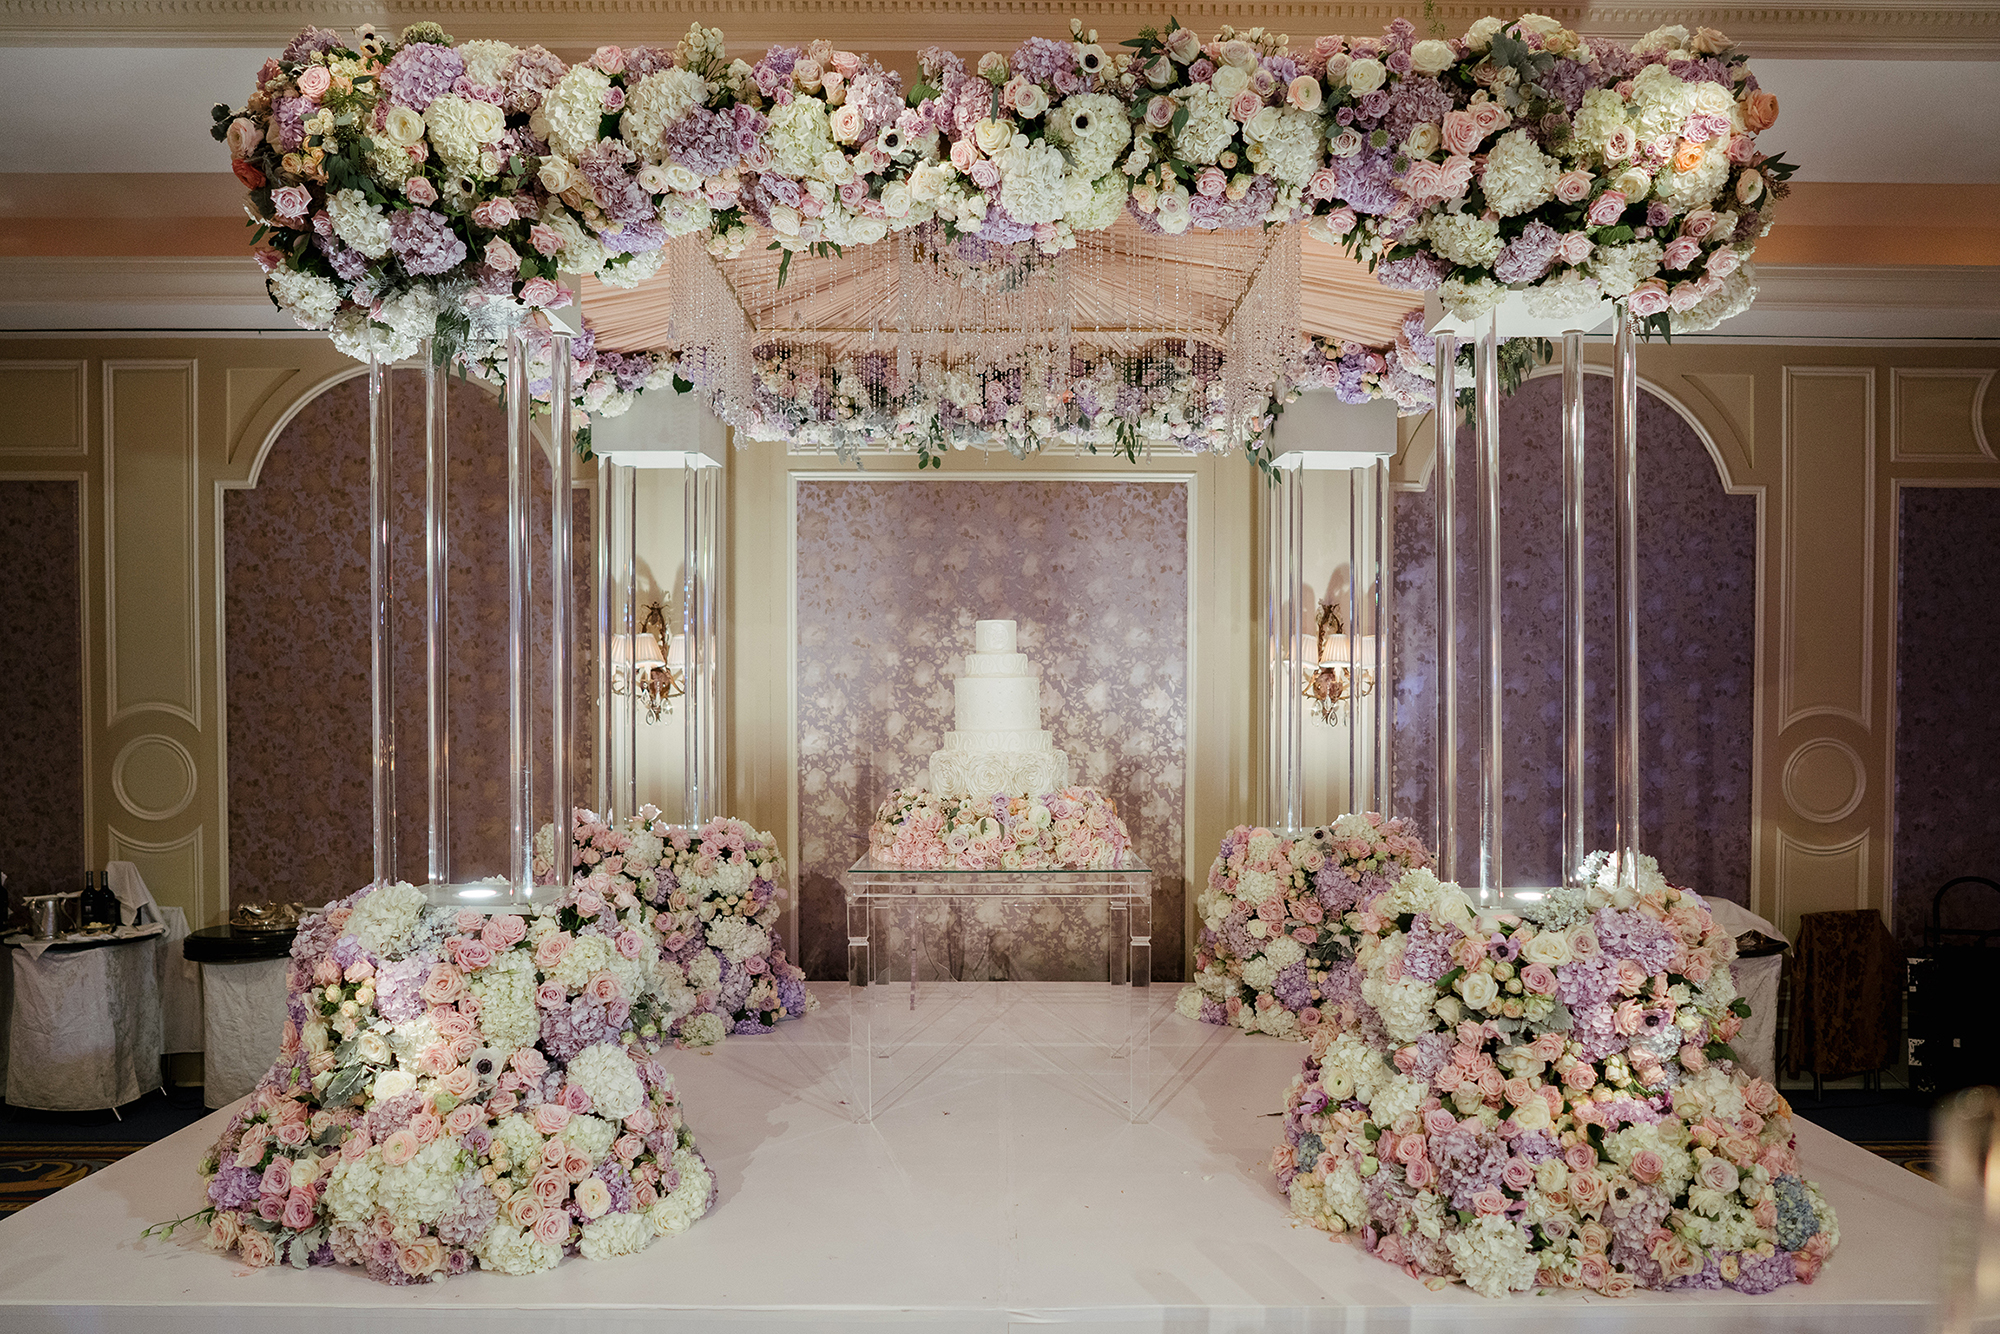 wedding cake, cake display, wedding decor, wedding inspiration, purple, pink, white, floral canopy